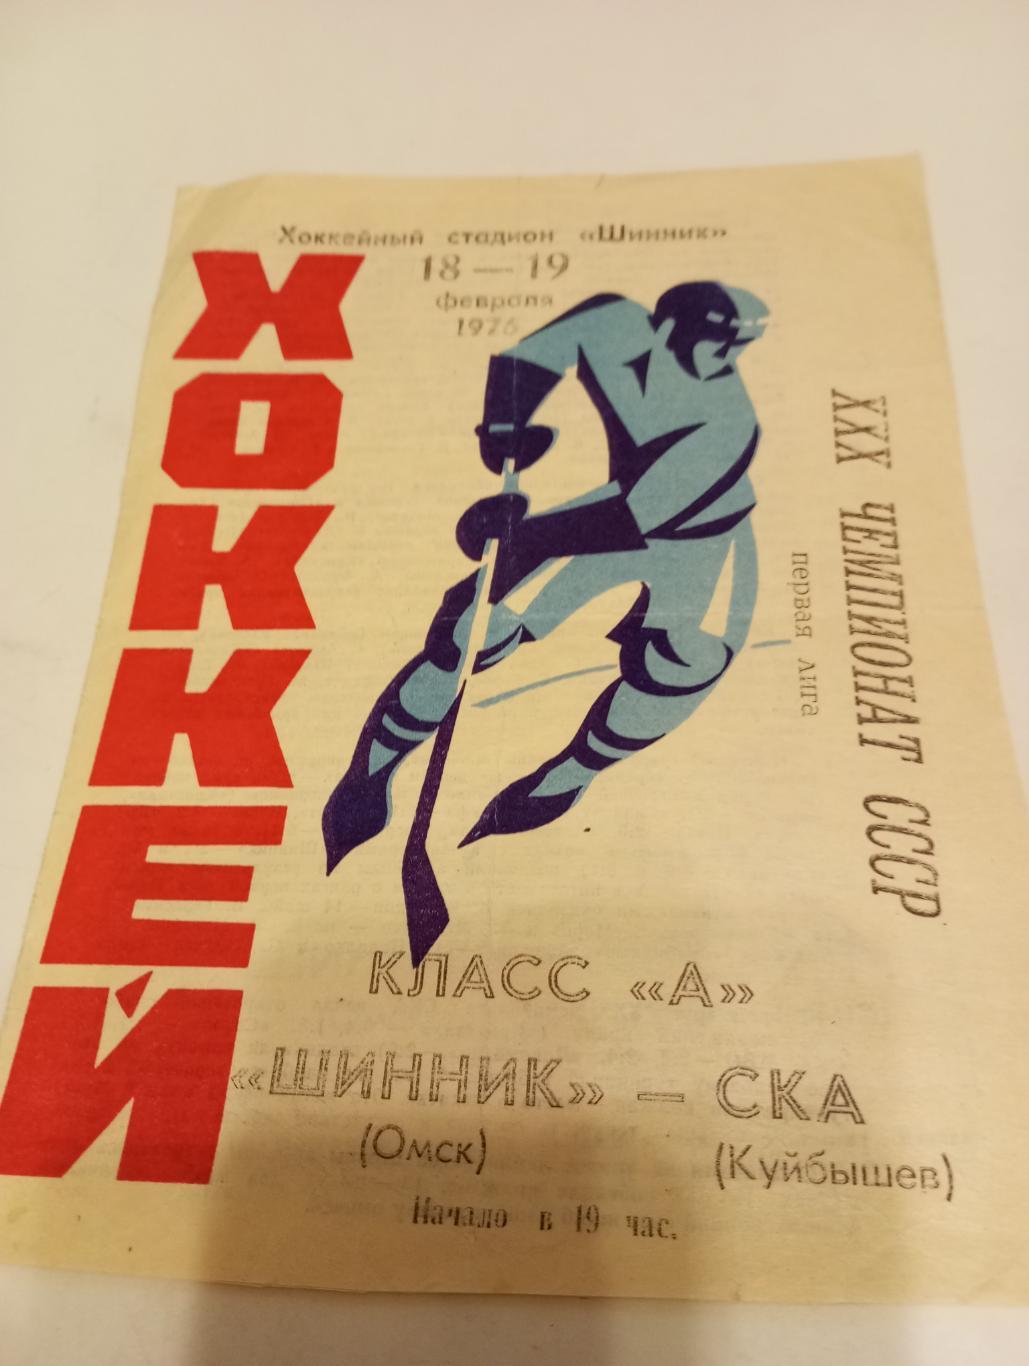 Шинник Омск) - ска(Куйбышев).18/19.02.1976.